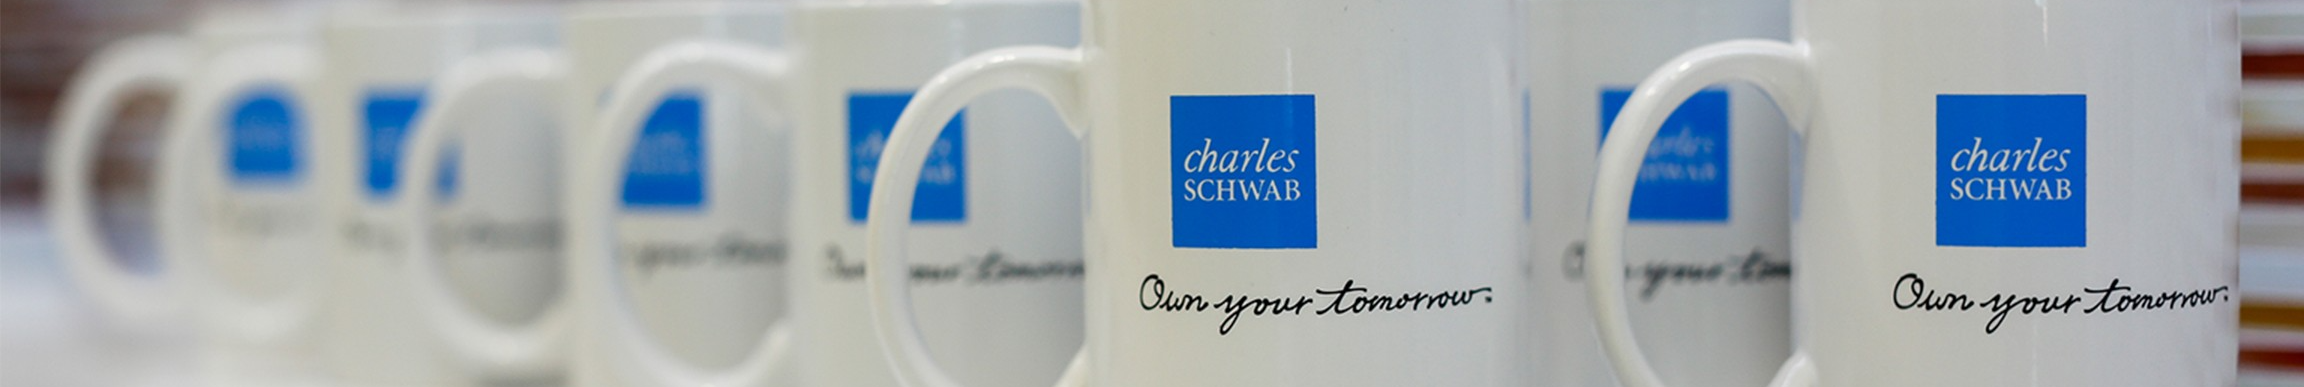 Charles Schwab background